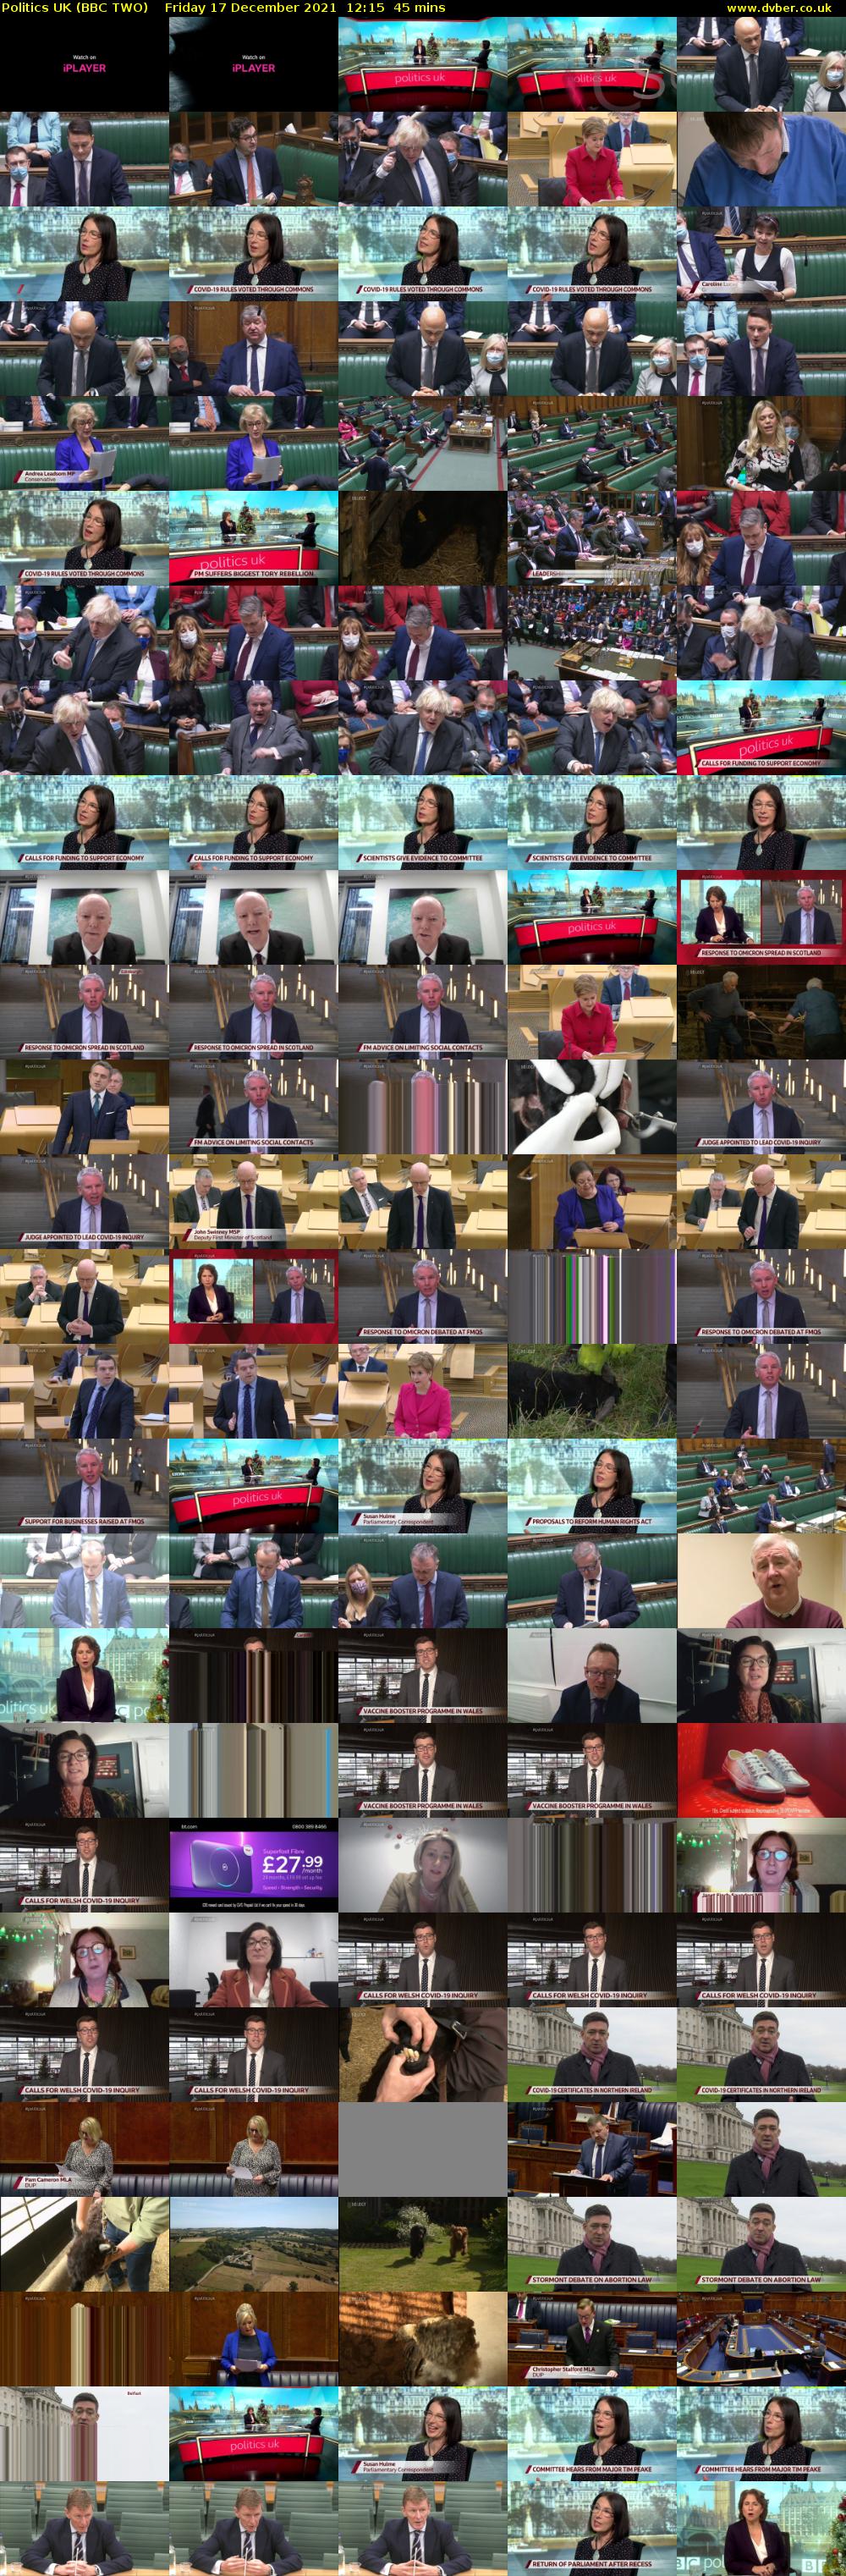 Politics UK (BBC TWO) Friday 17 December 2021 12:15 - 13:00